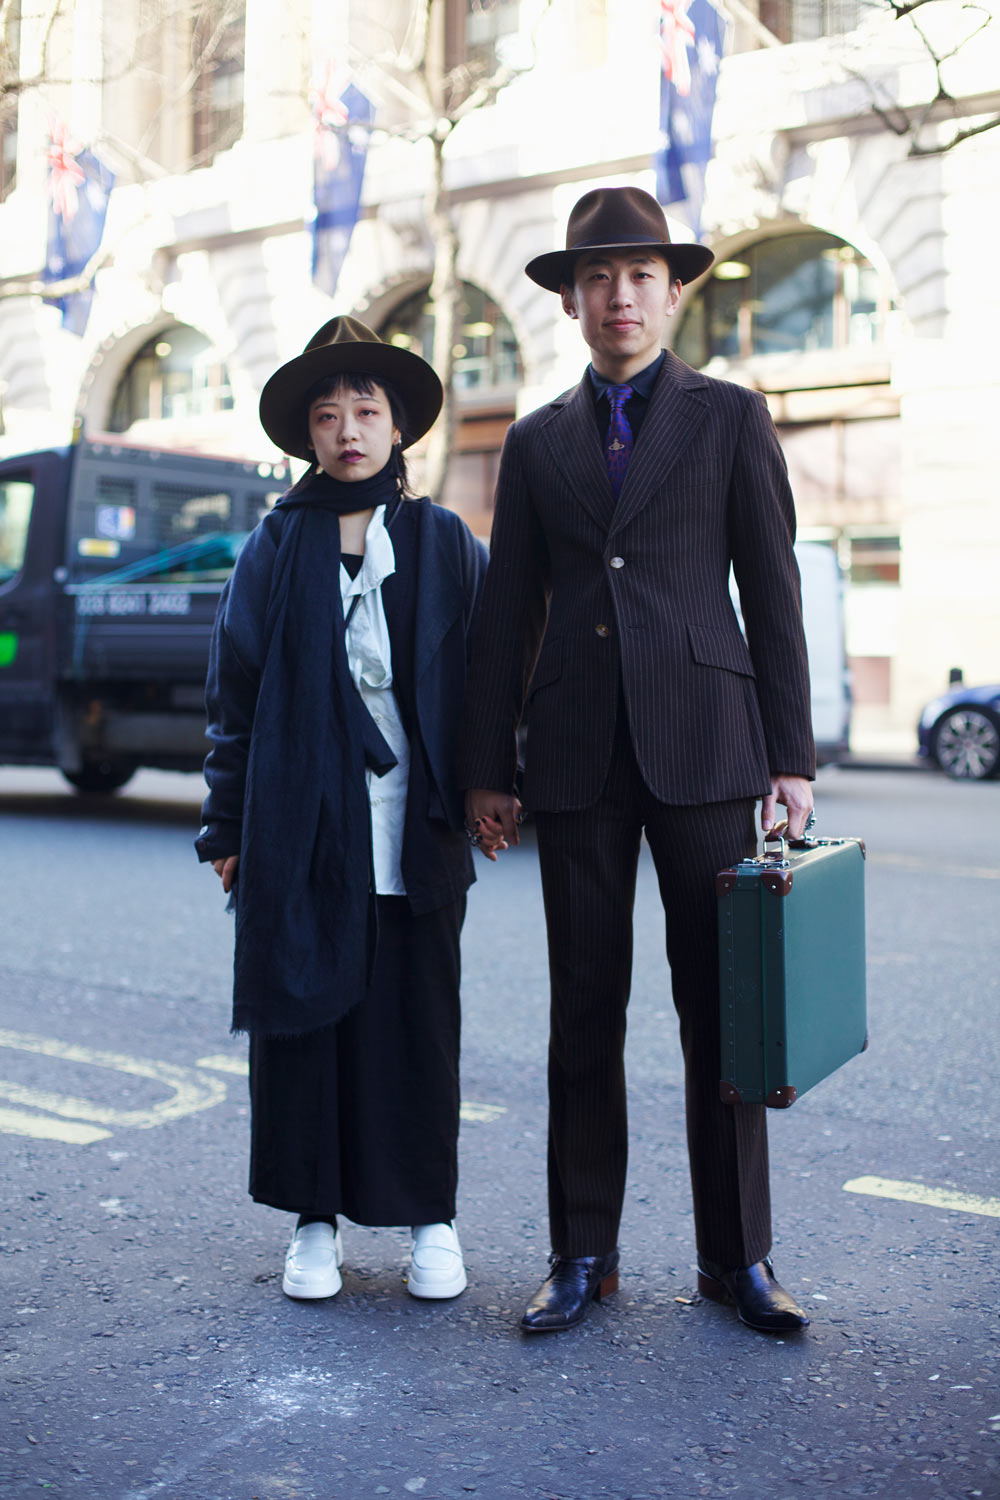 Miista Streetstyle shots from London Fashion Week